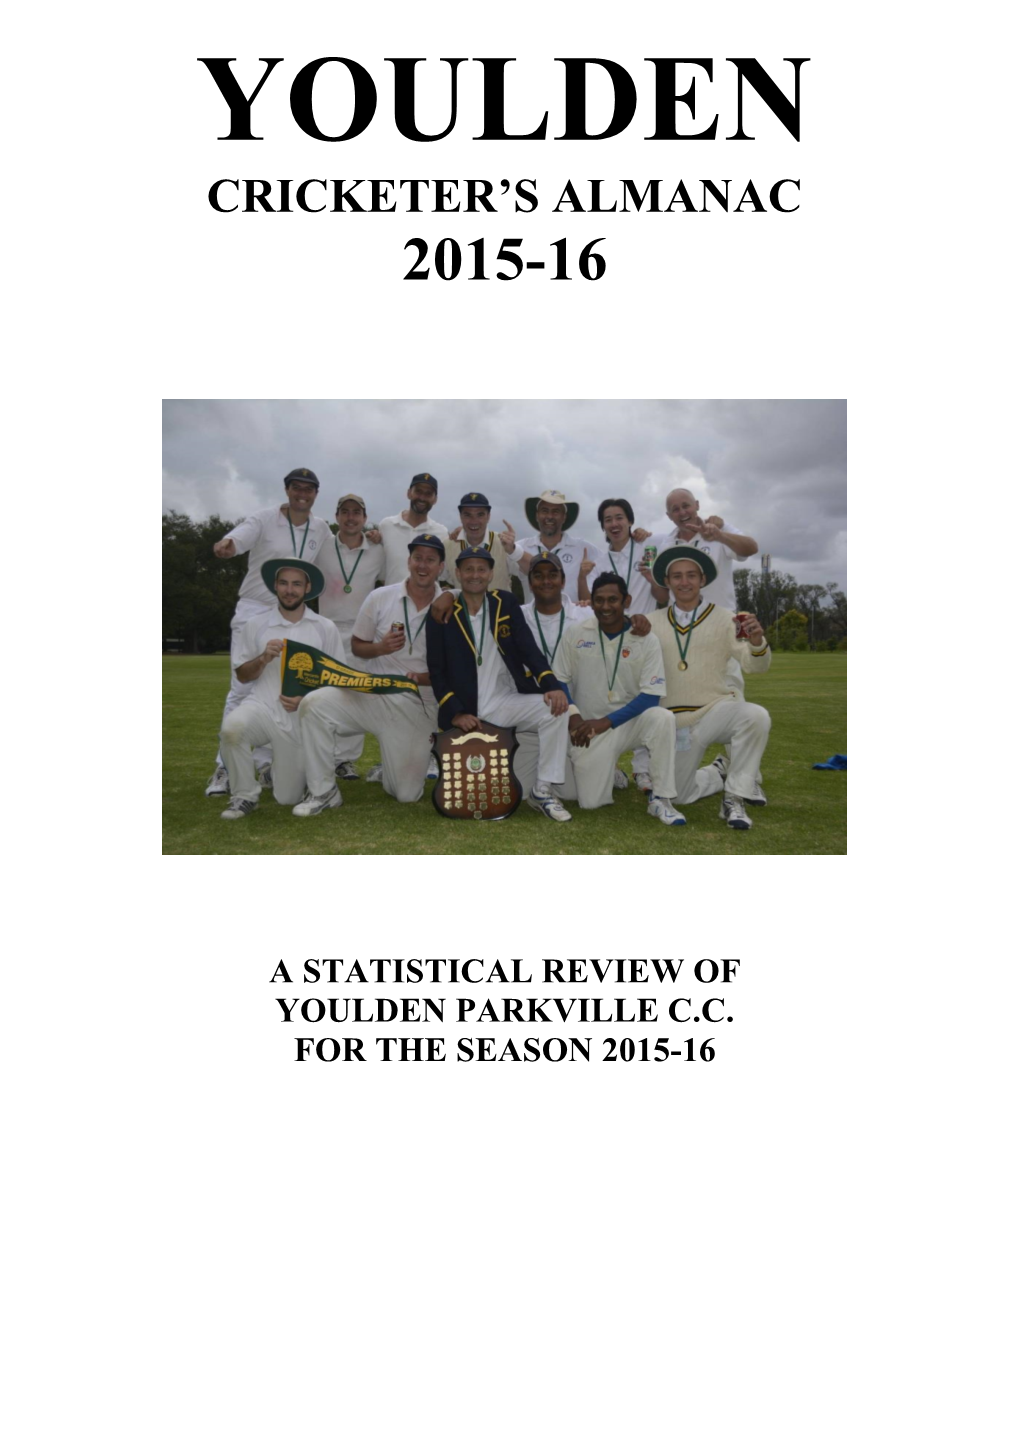 Youlden Cricketer's Almanac 2015-16